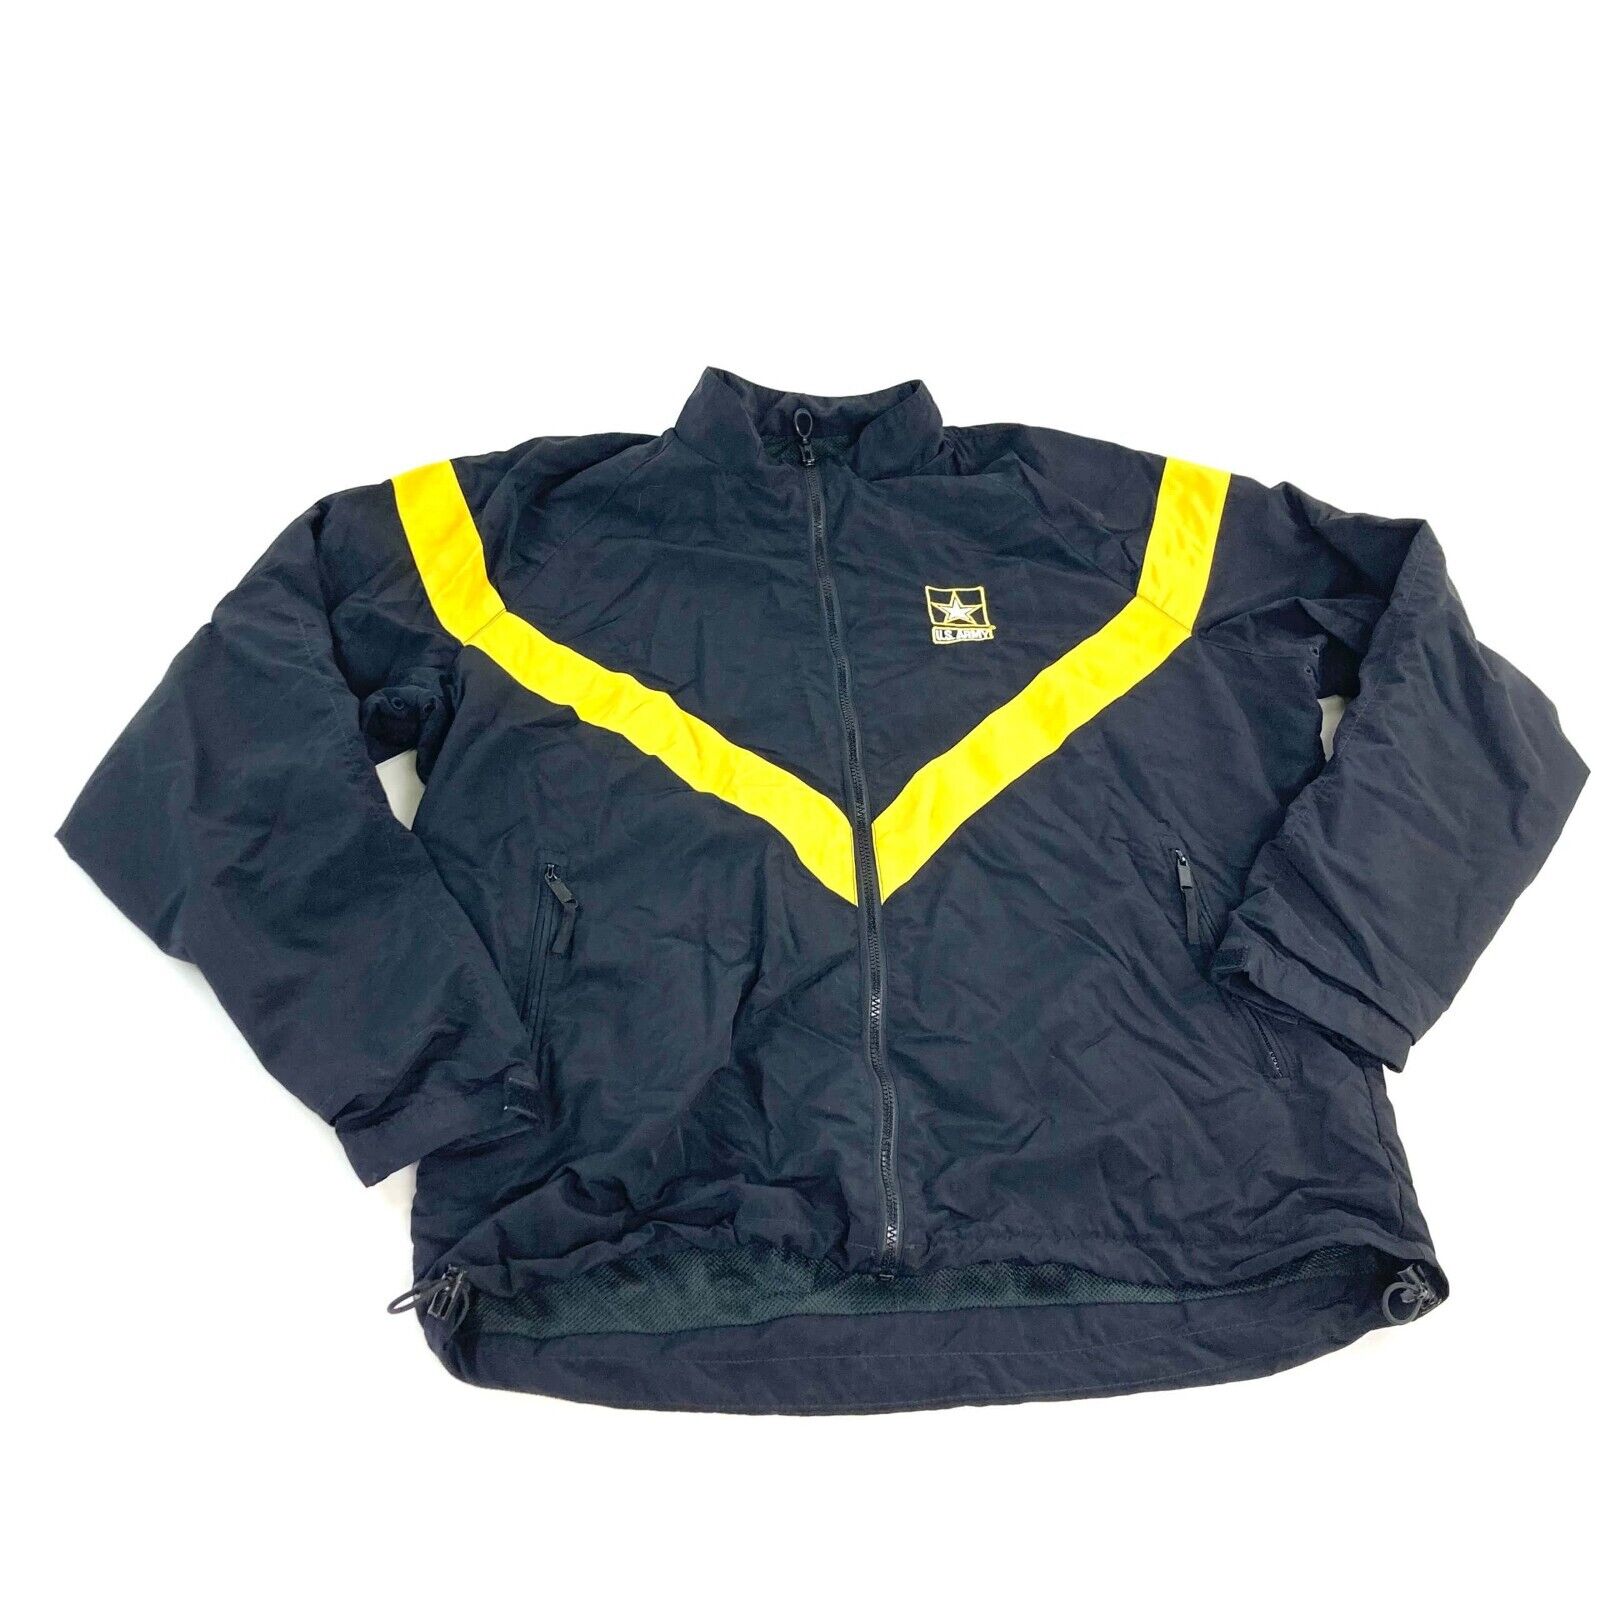 SMALL/REGULAR ARMY APFU Jackets Physical Fitness Uniform Unisex Jacket